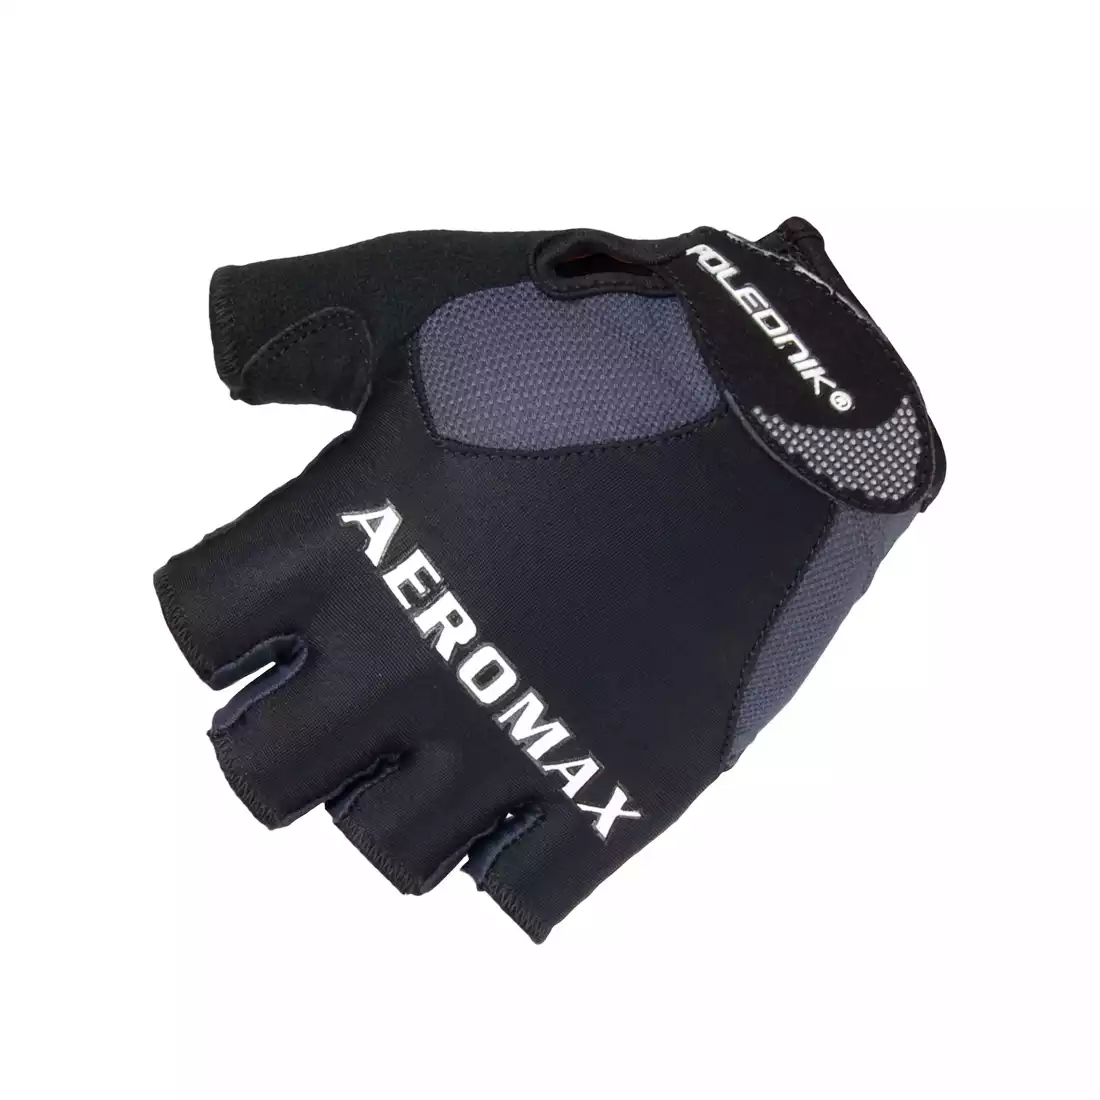 POLEDNIK AEROMAX rękawiczki rowerowe, kolor: Czarny